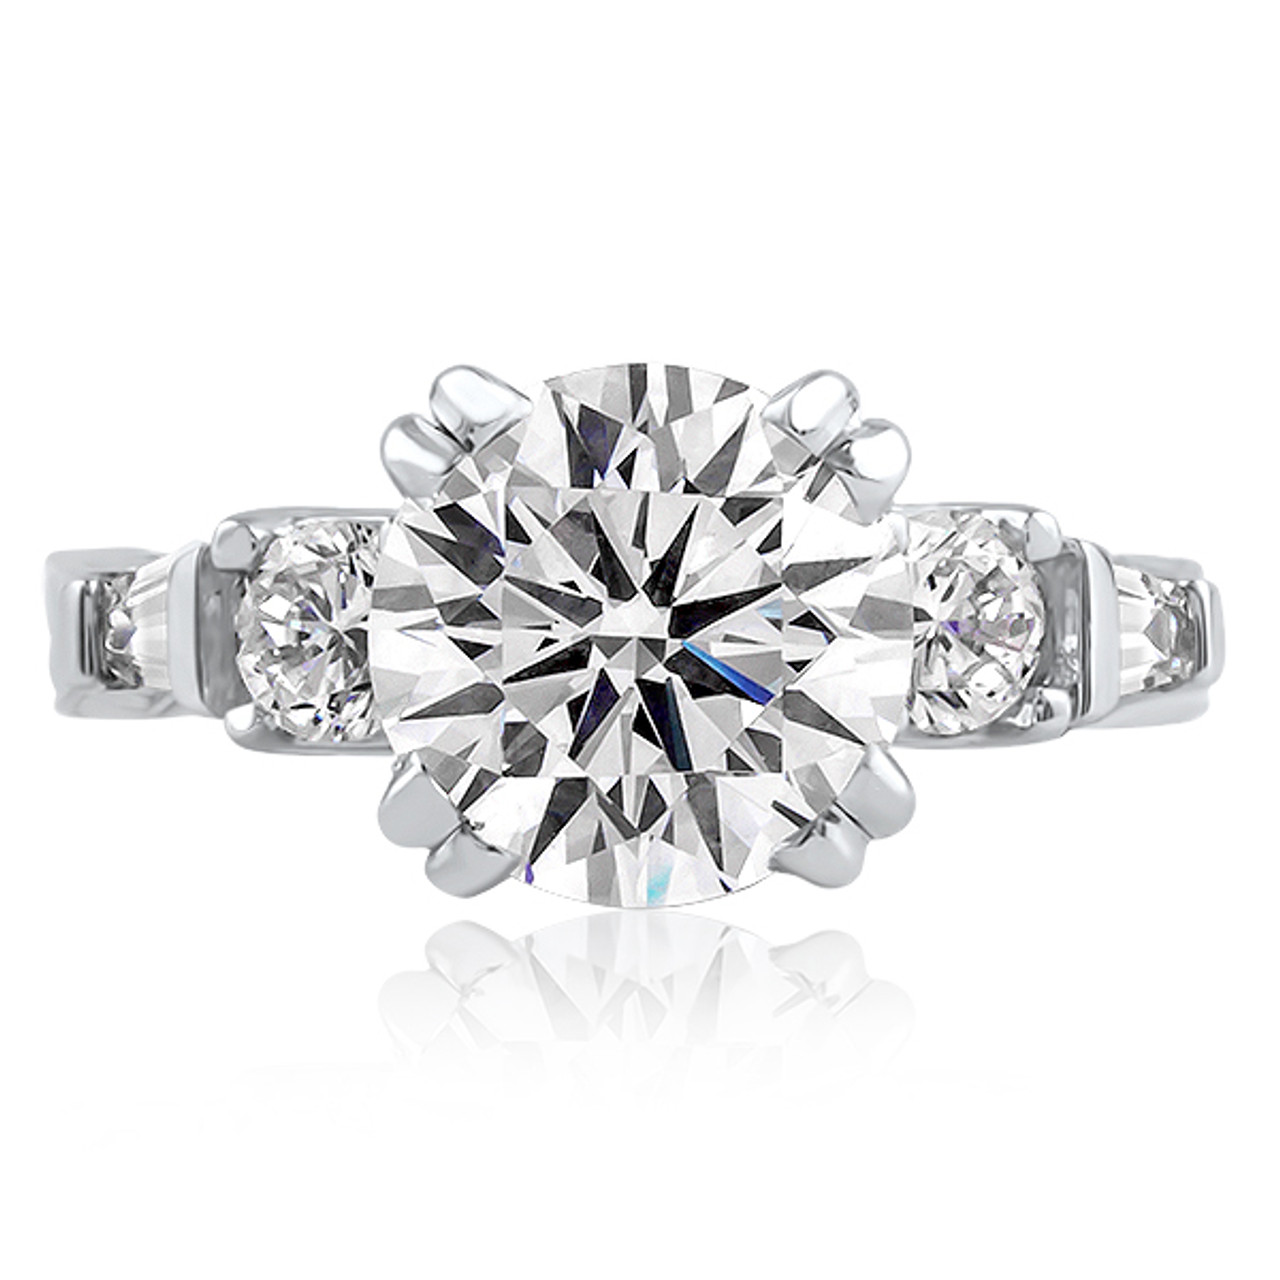 Palma: 1.5 carat round diamond engagement ring